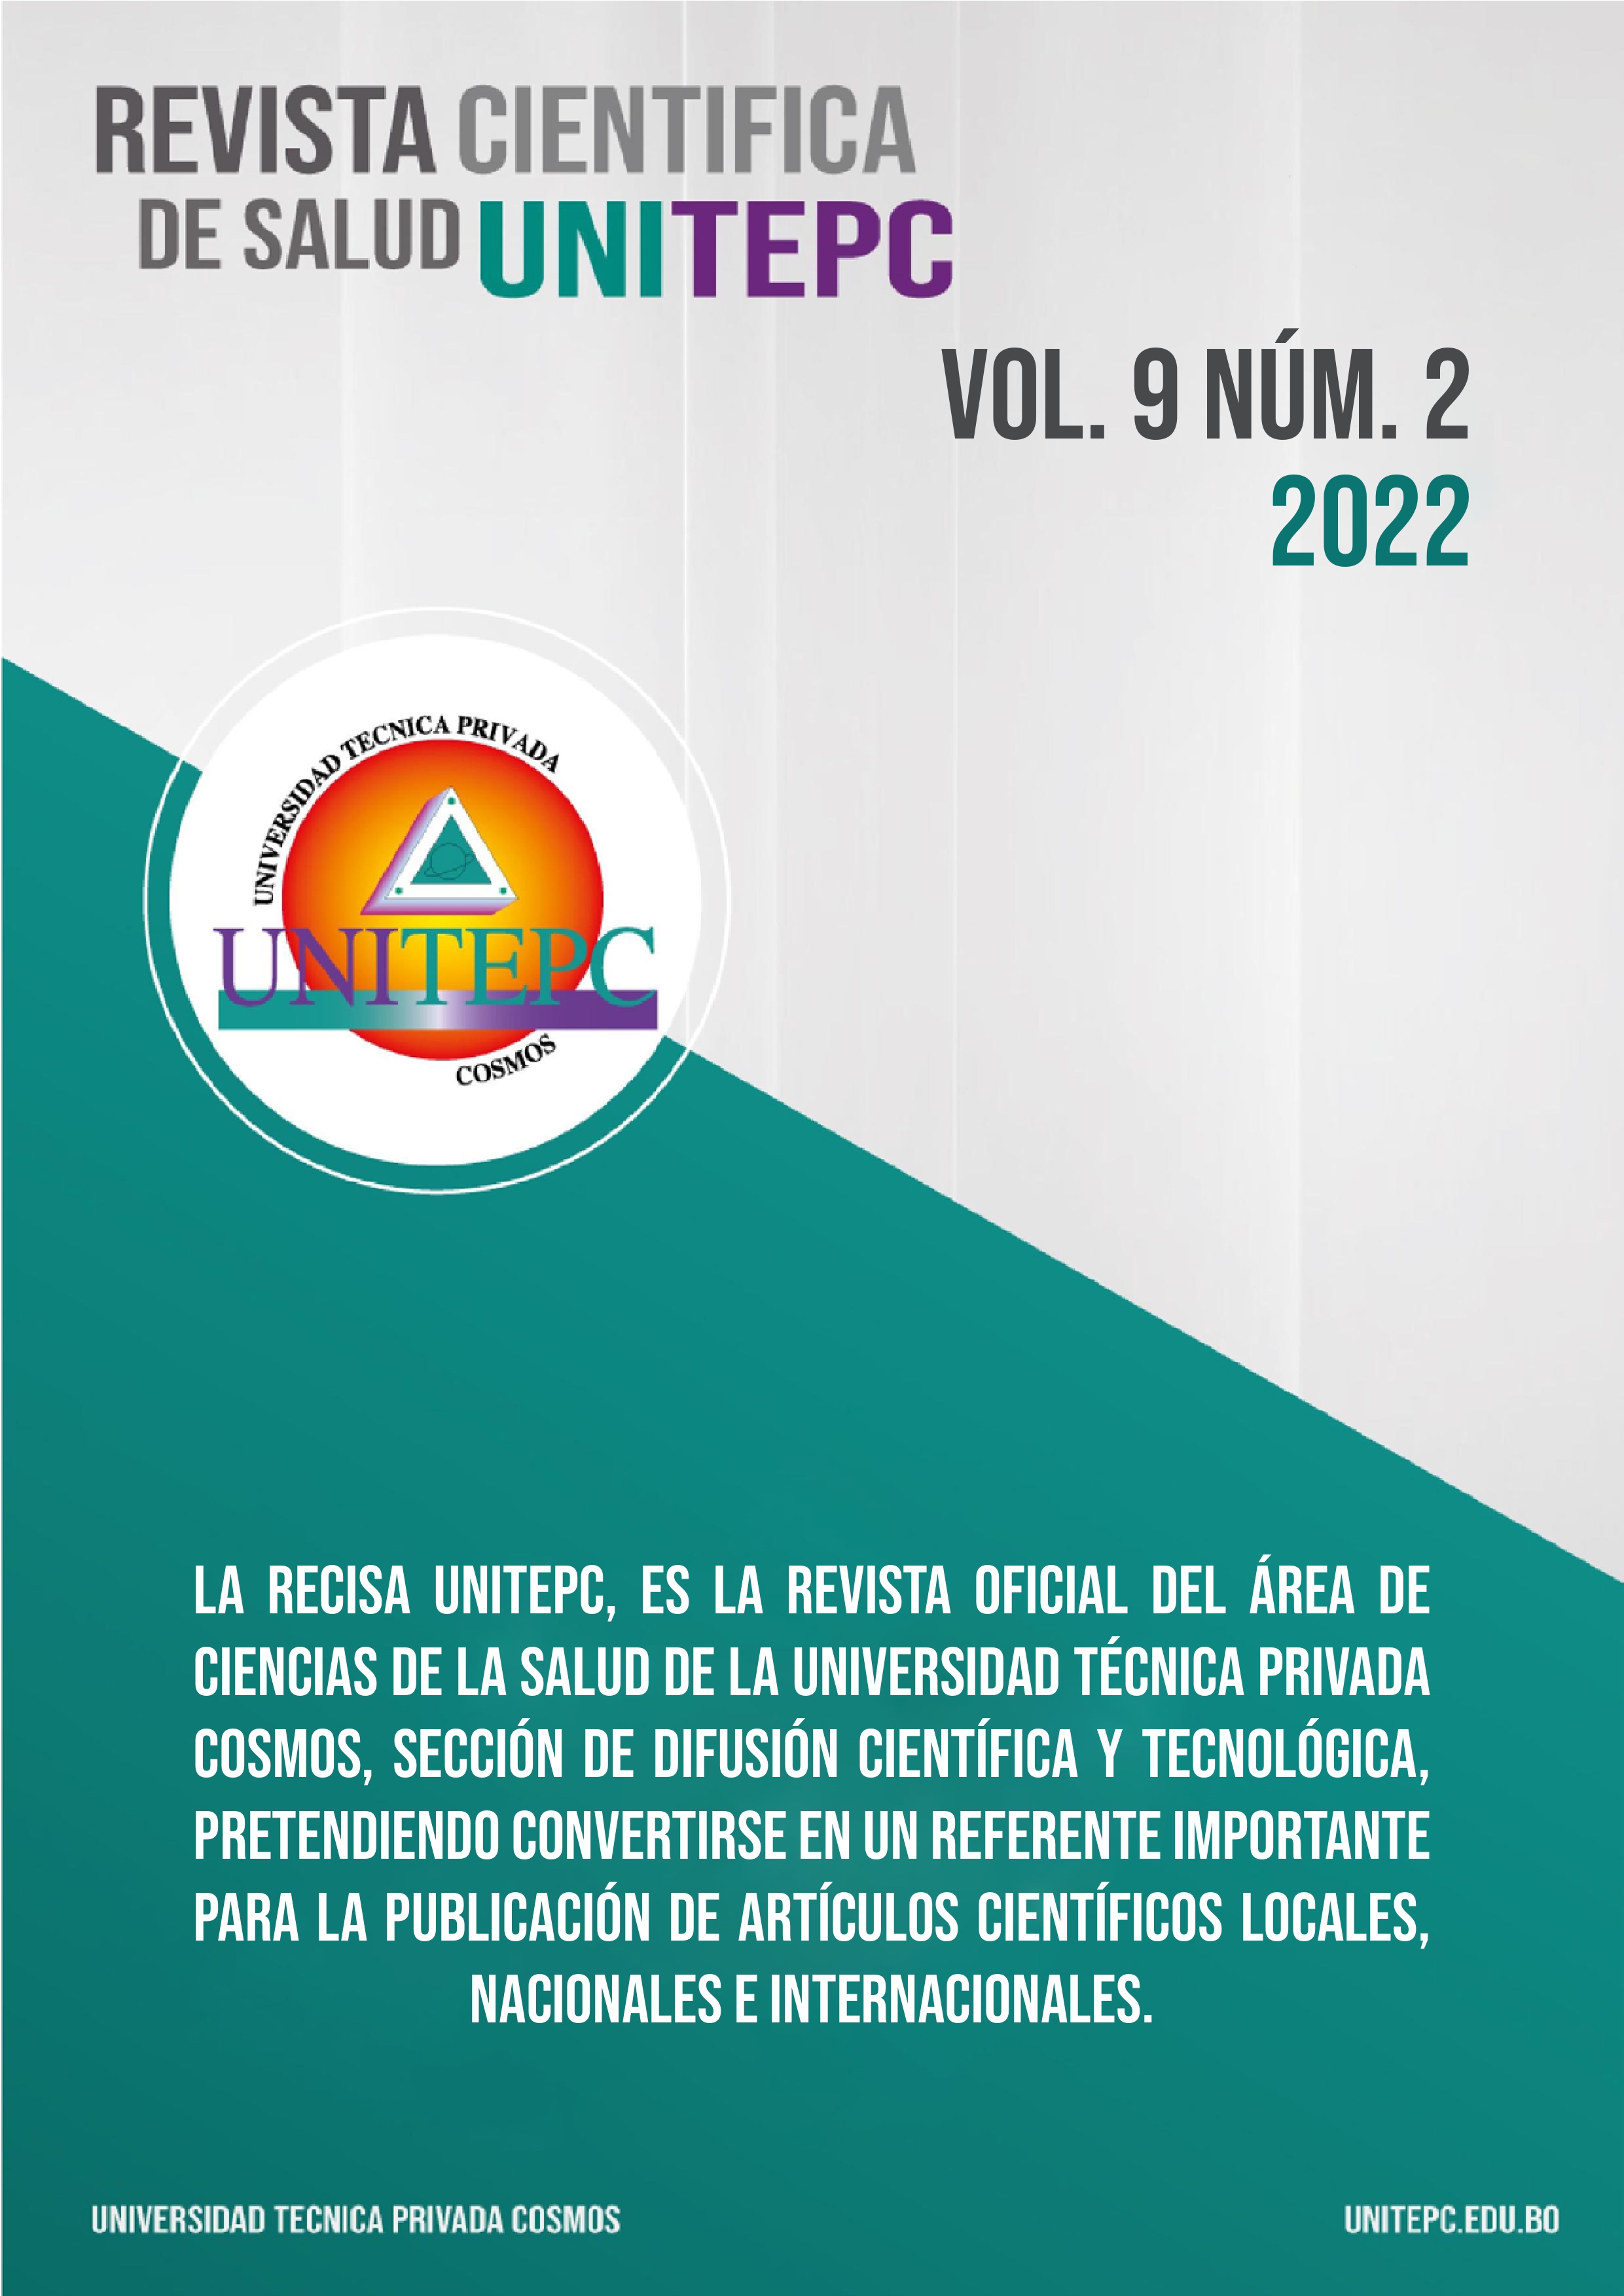 					Ver Vol. 9 Núm. 2 (2022): Revista Científica de Salud UNITEPC
				